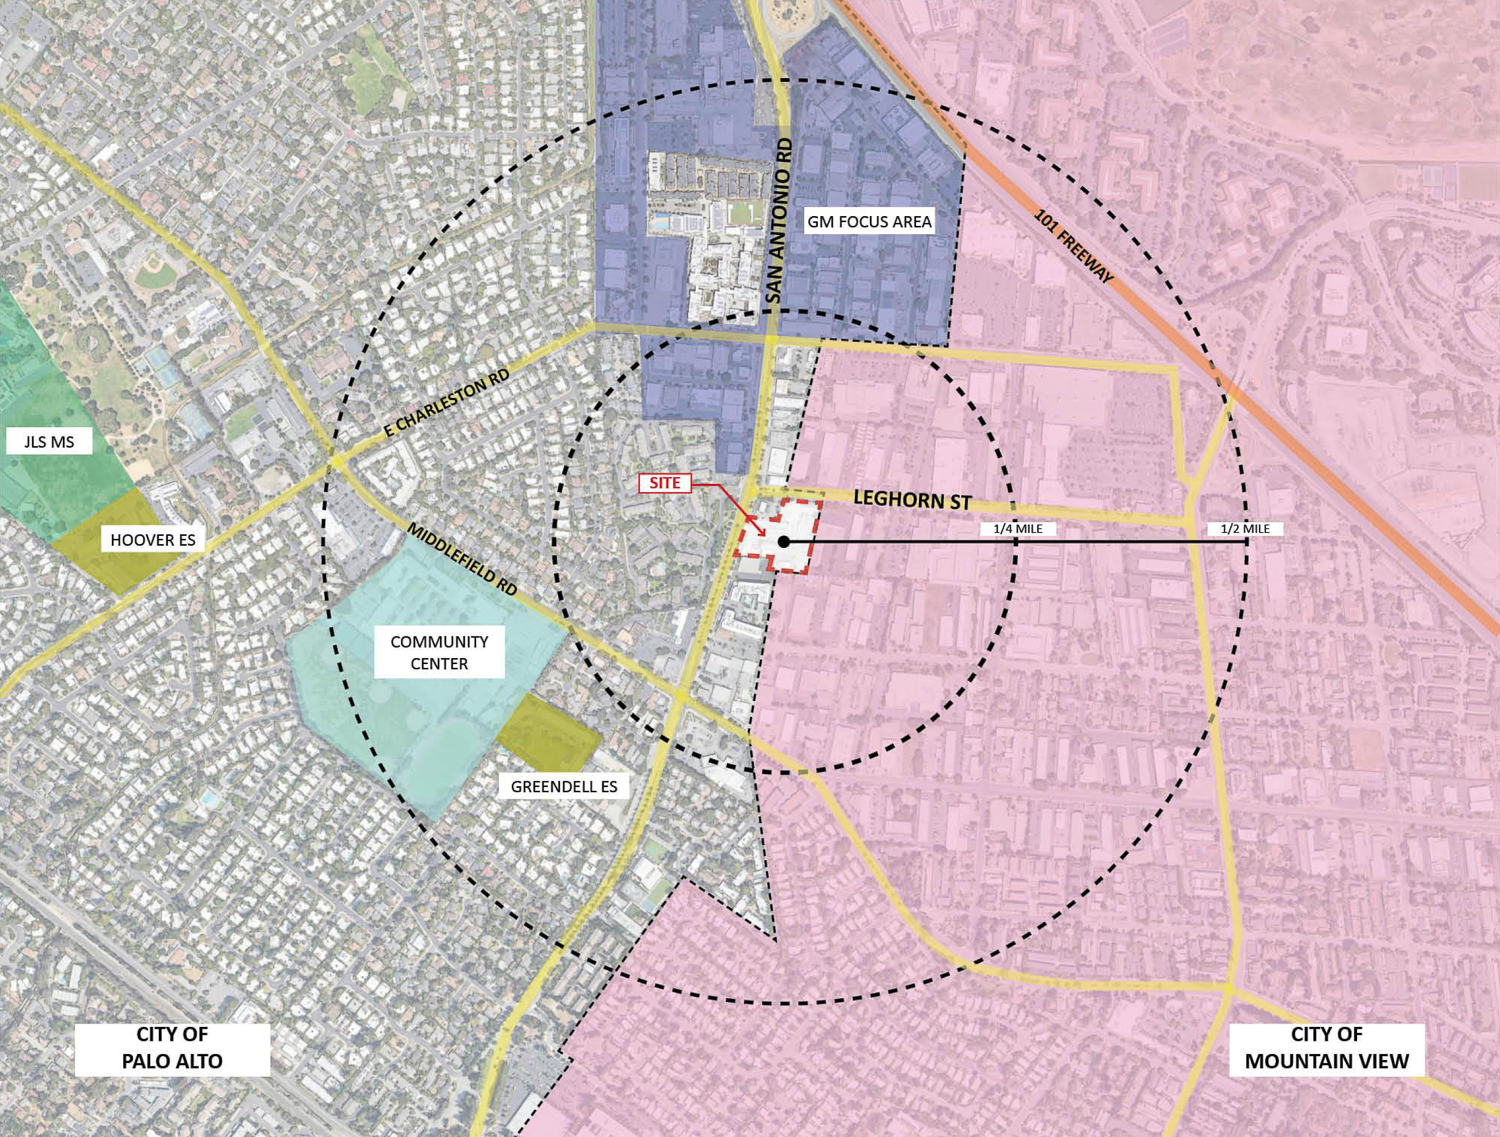 762 San Antonio Road area context map, illustration by Studio T-Square